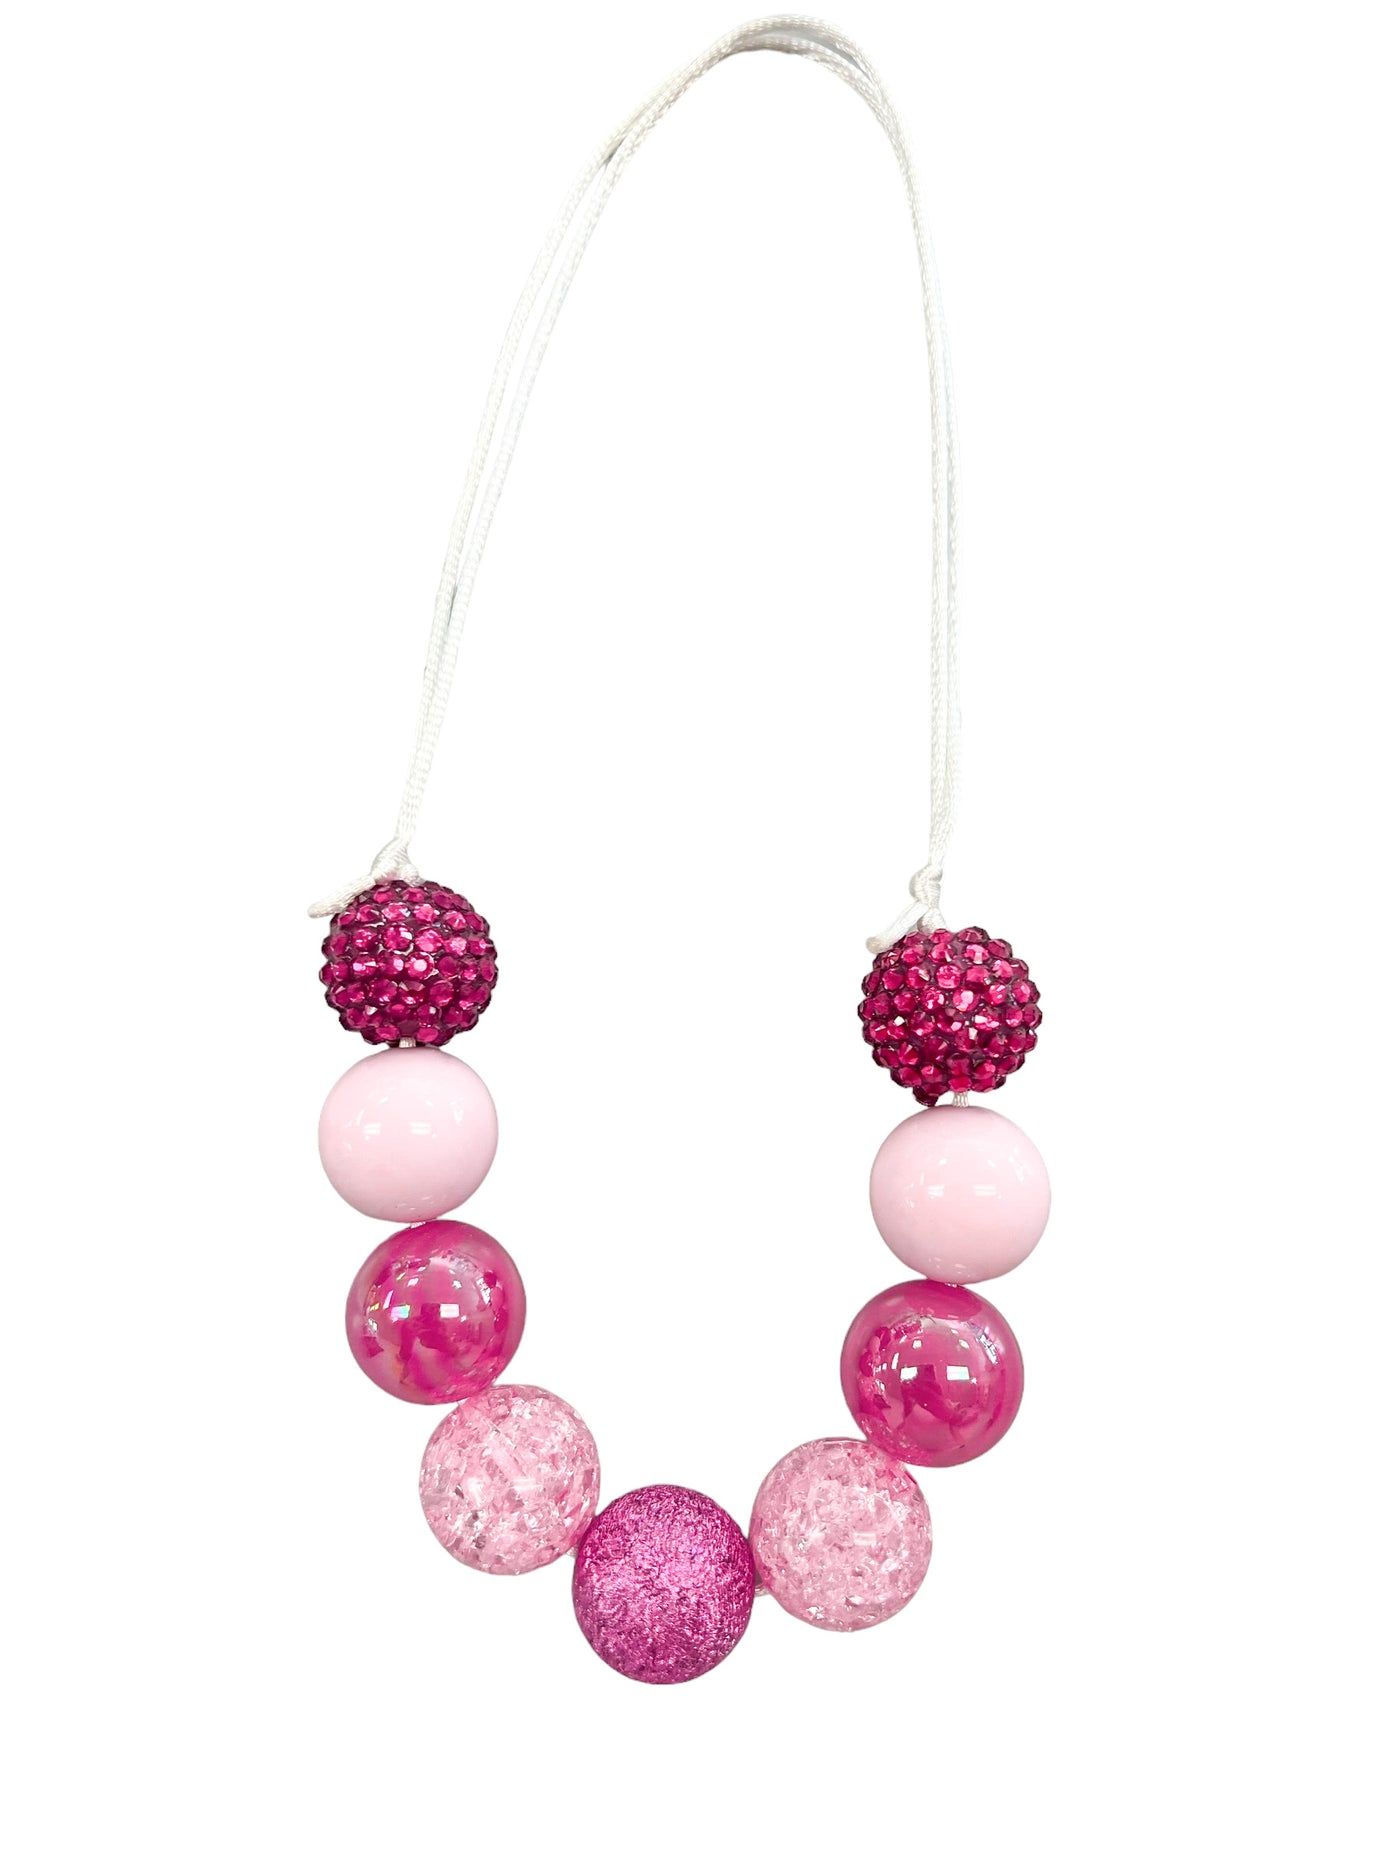 Beaded Necklaces - Bubblegum Necklaces - Jewelry